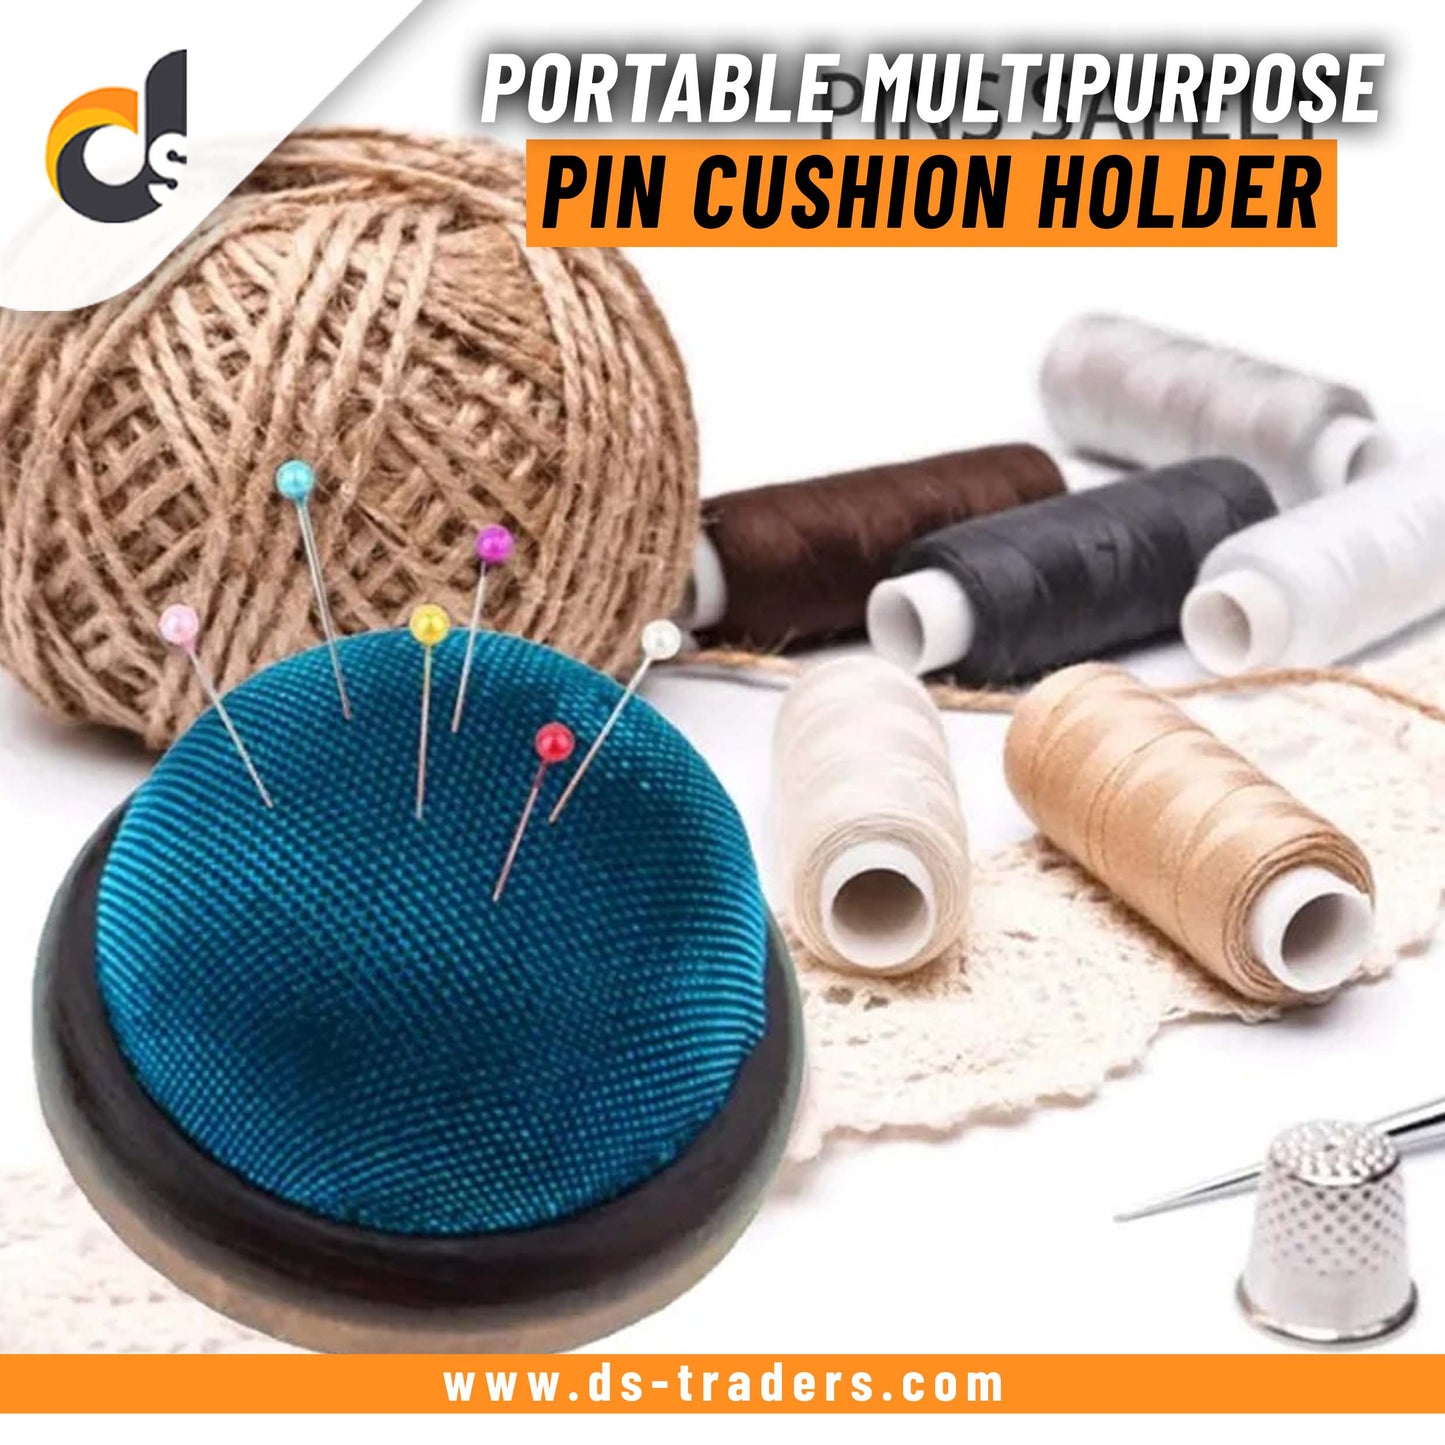 Portable Multipurpose Pin Cushion Holder